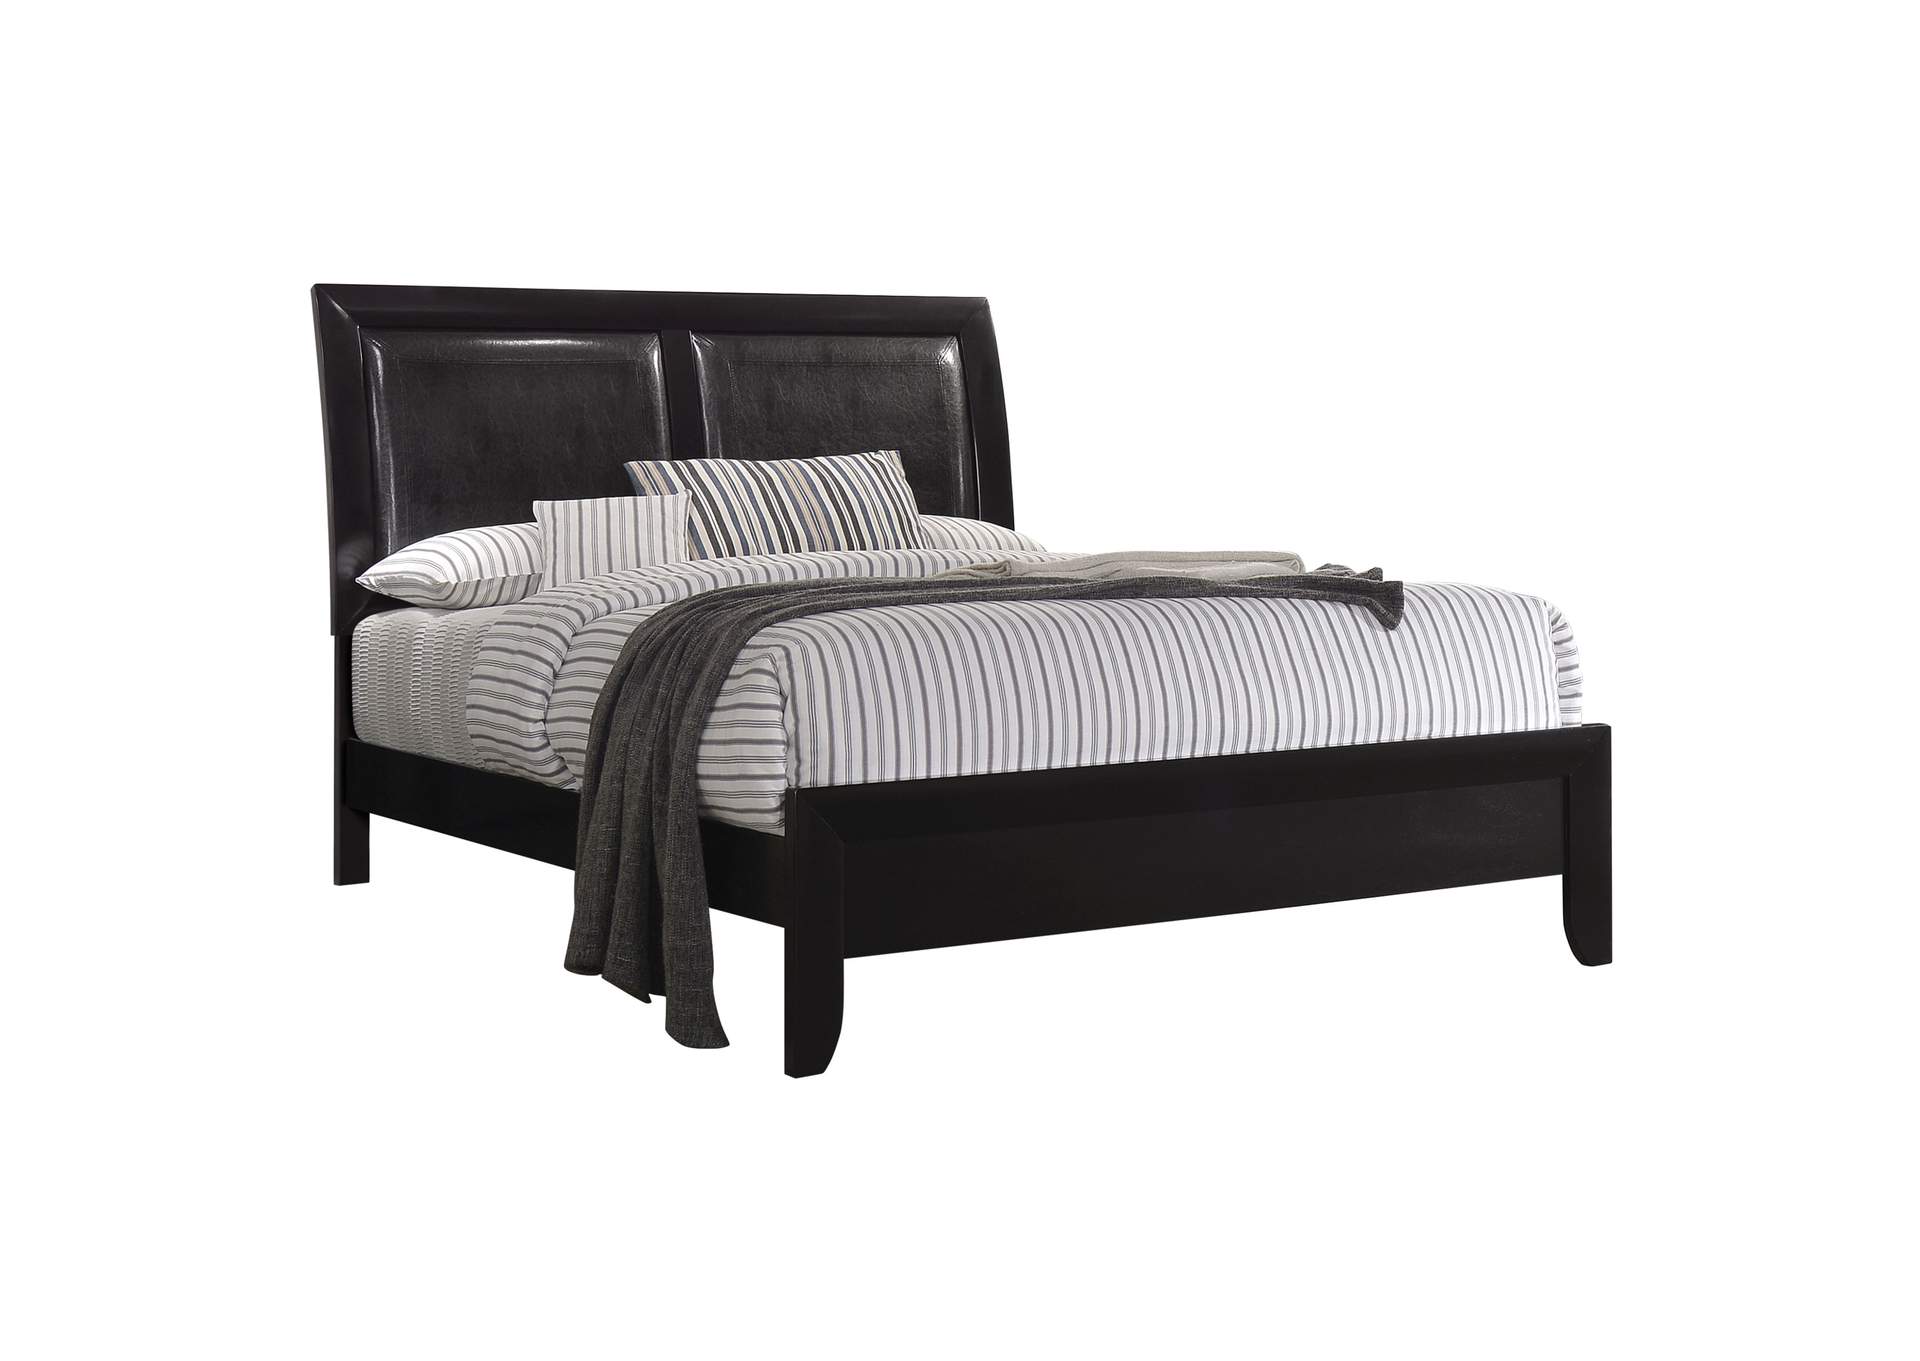 Briana Eastern King Upholstered Panel Bed Black,Coaster Furniture